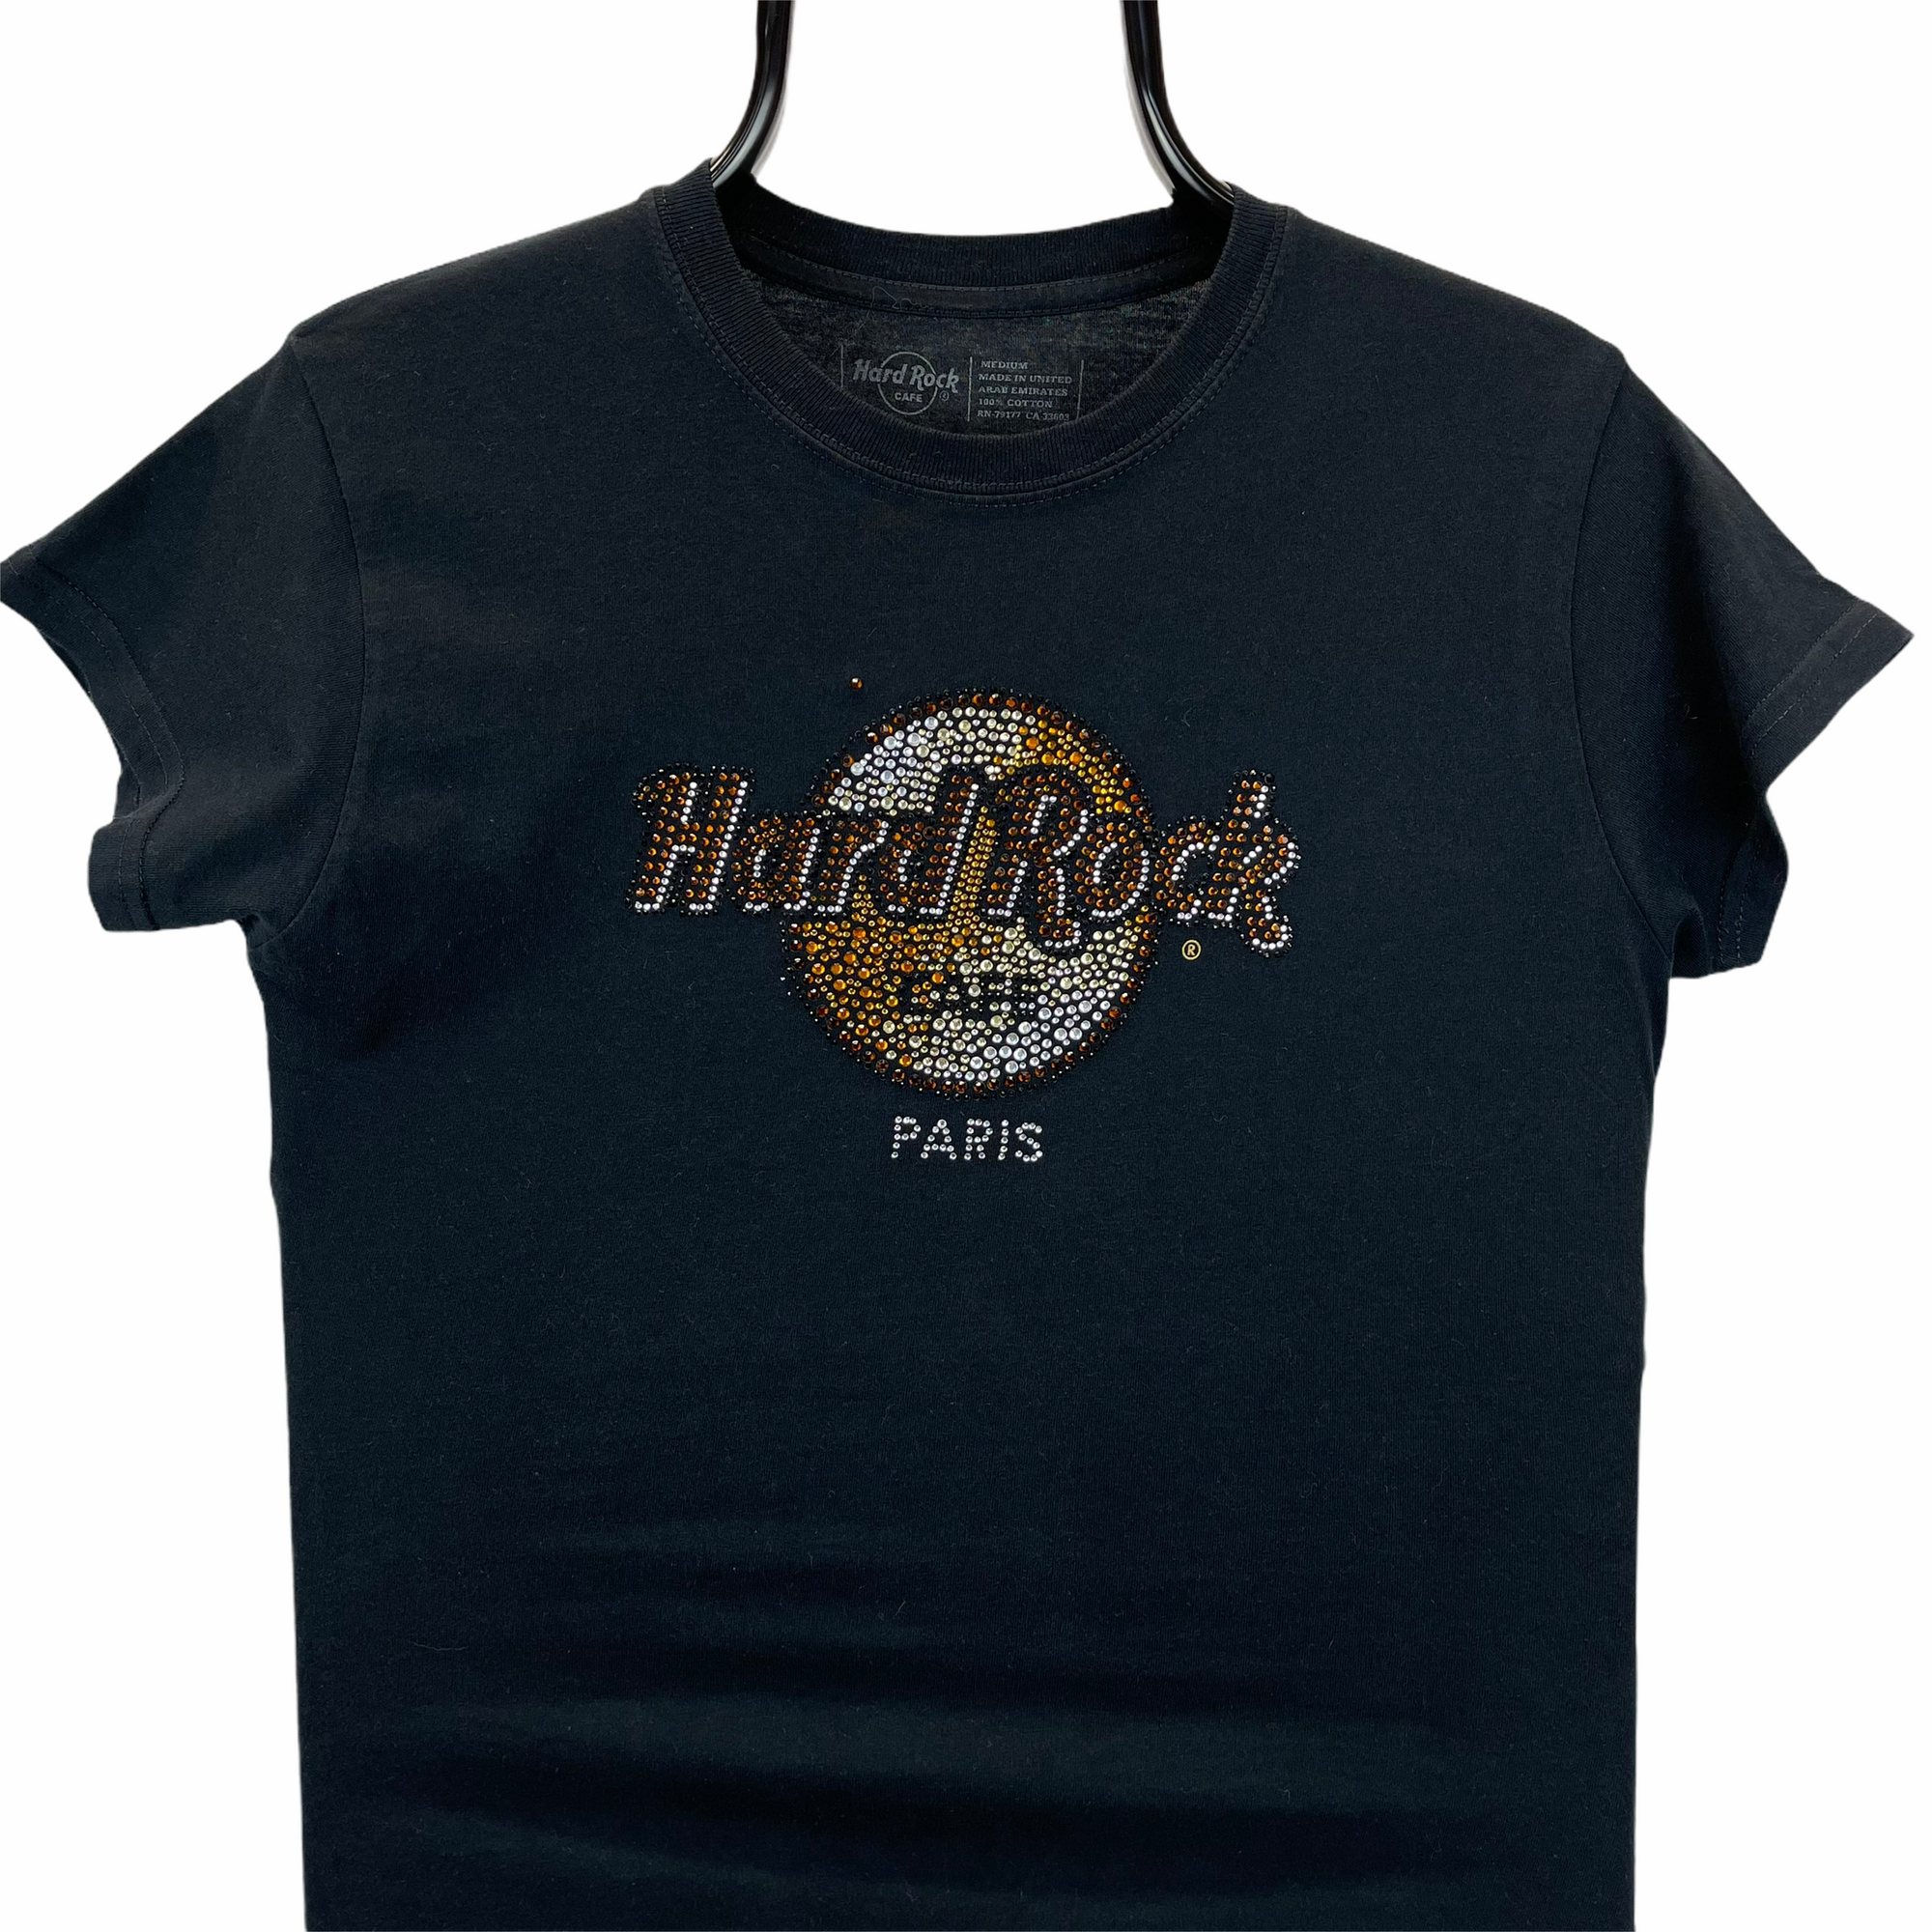 Vintage Hard Rock Cafe Paris Jewels Tee - Men's XS/Women's Small